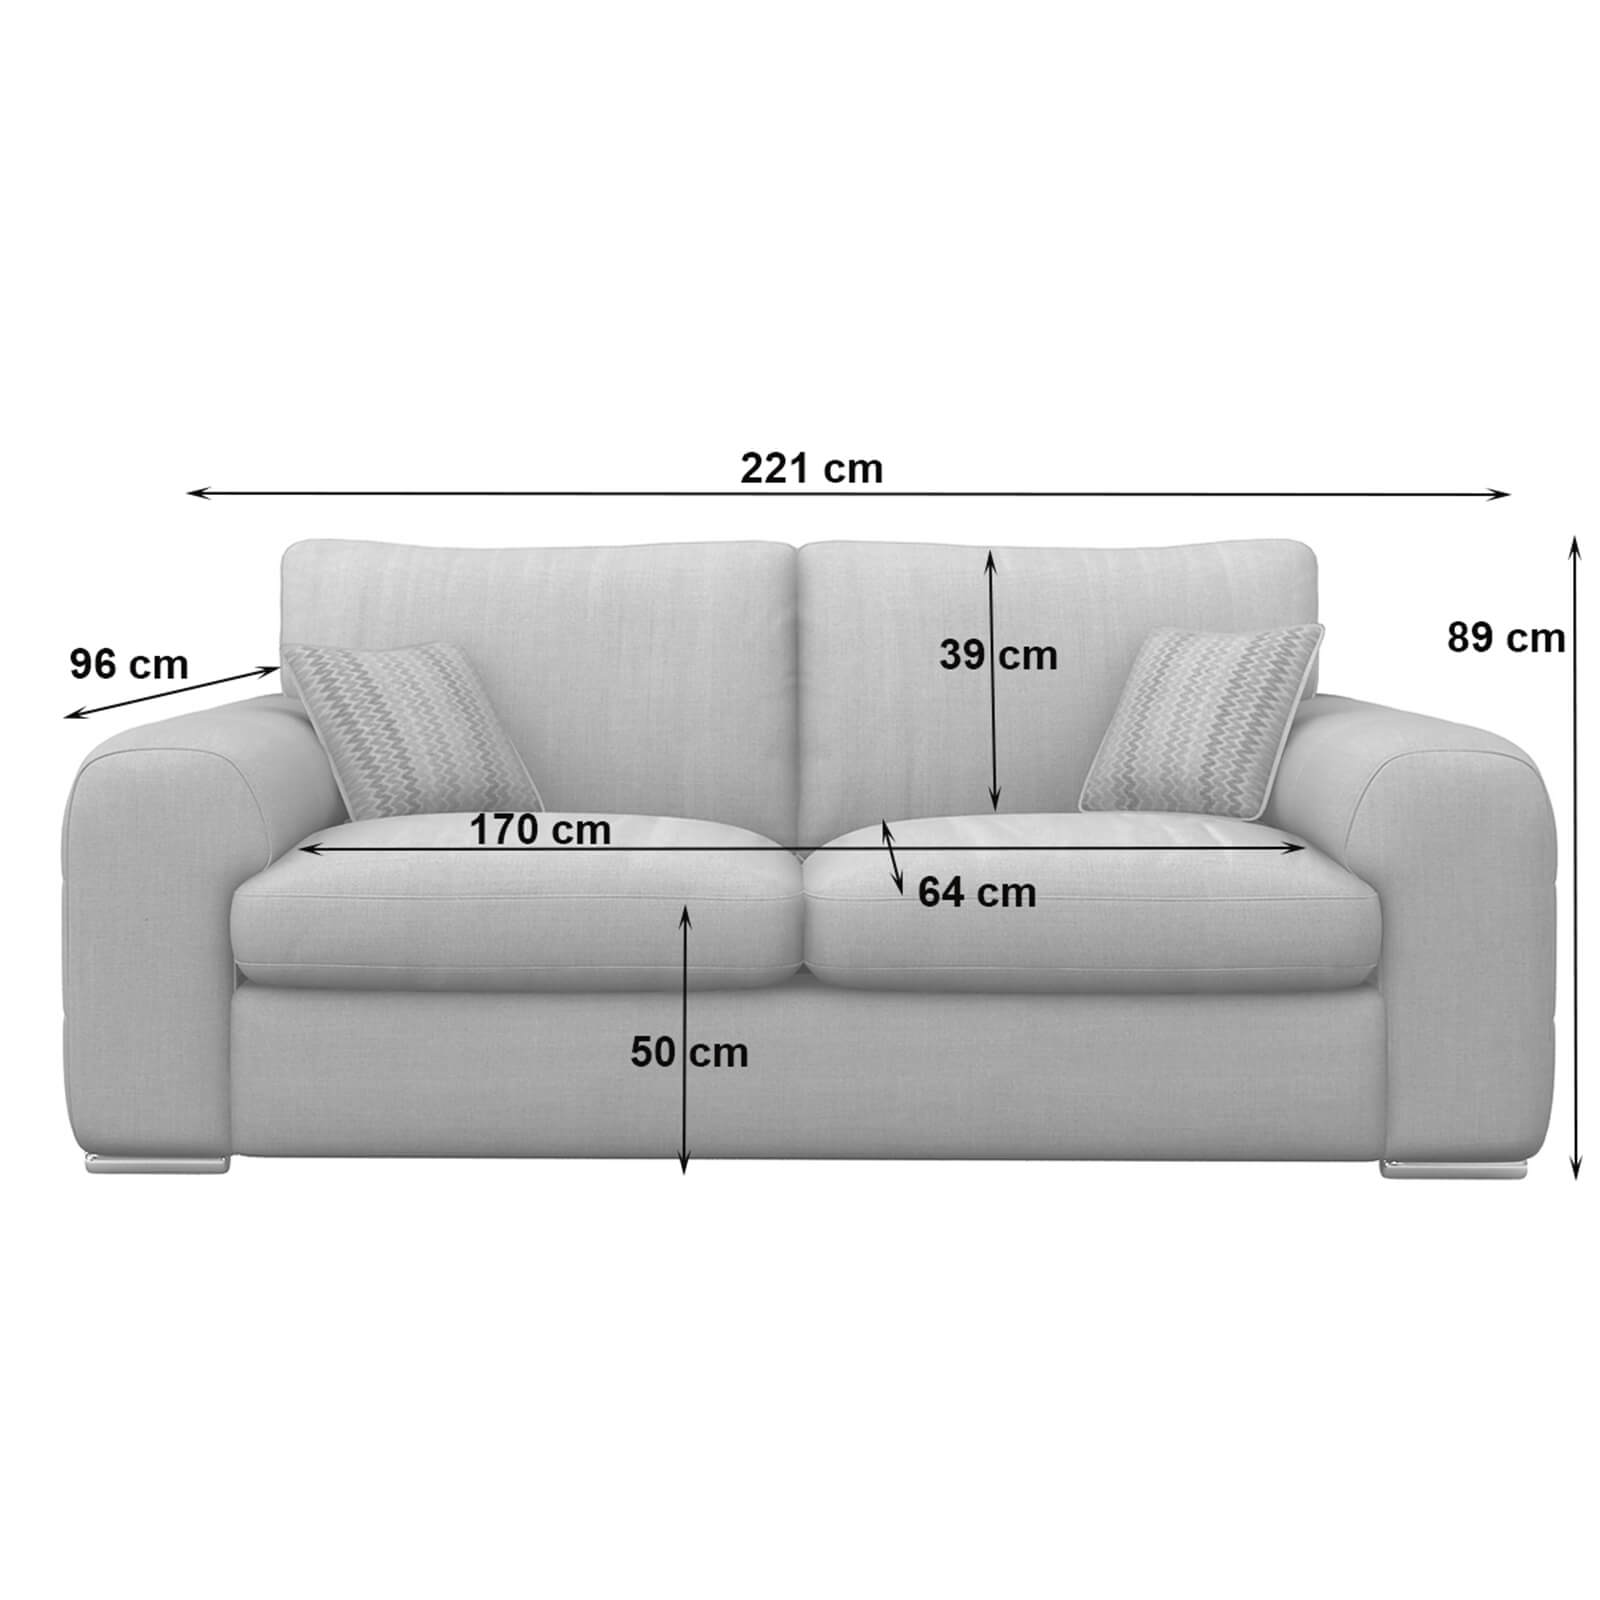 Amethyst 3 Seater Sofa - Sand